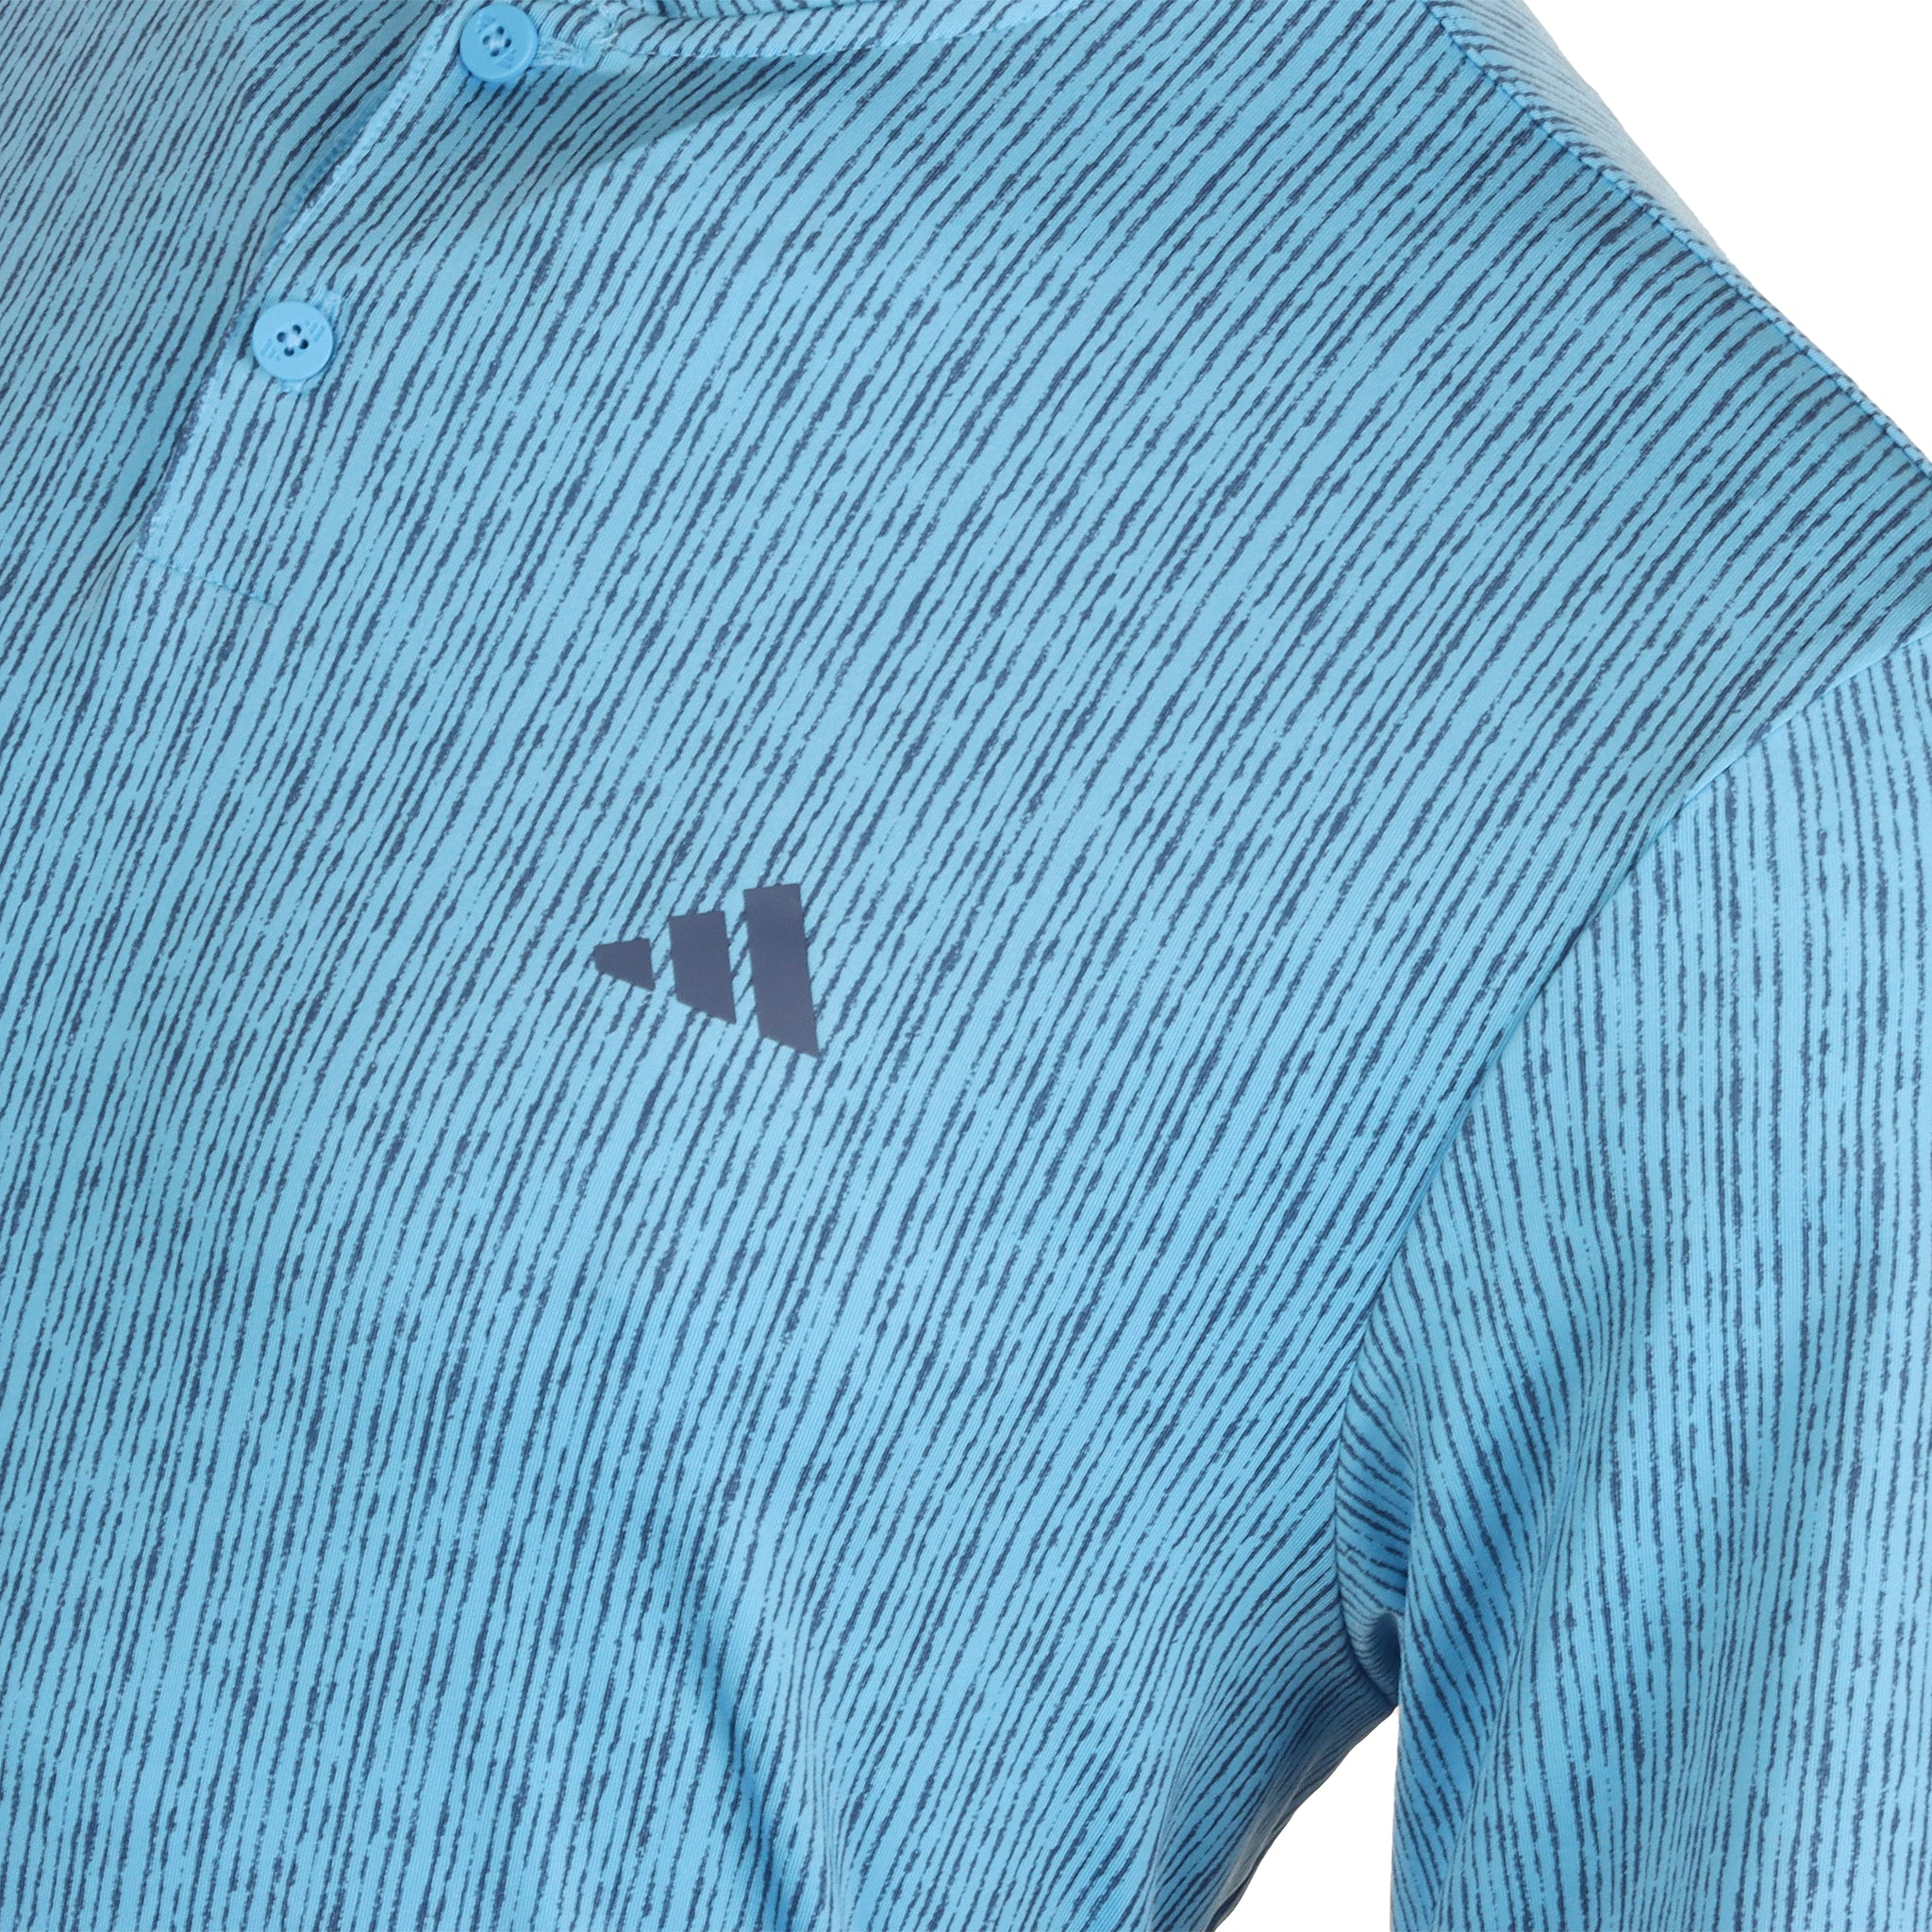 adidas Golf Ultimate365 Printed Shirt